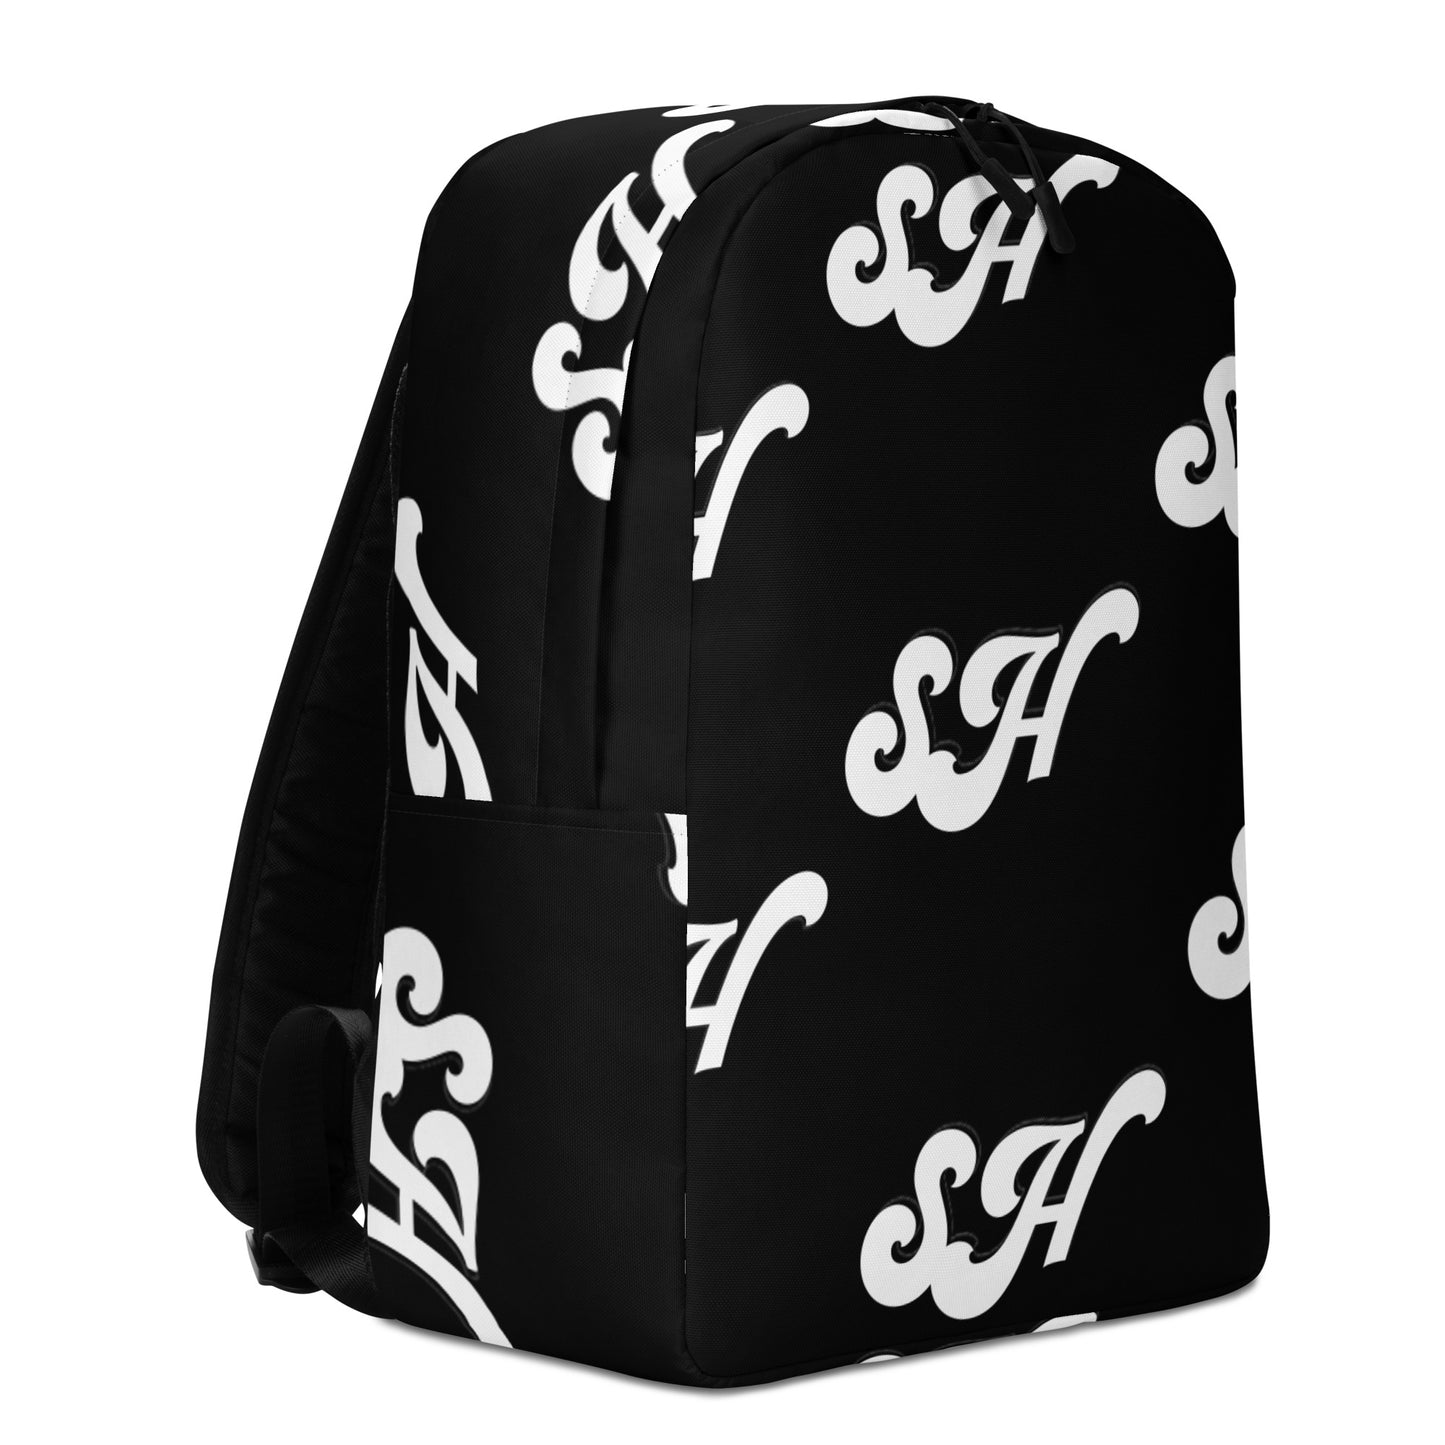 BLK Minimalist Backpack